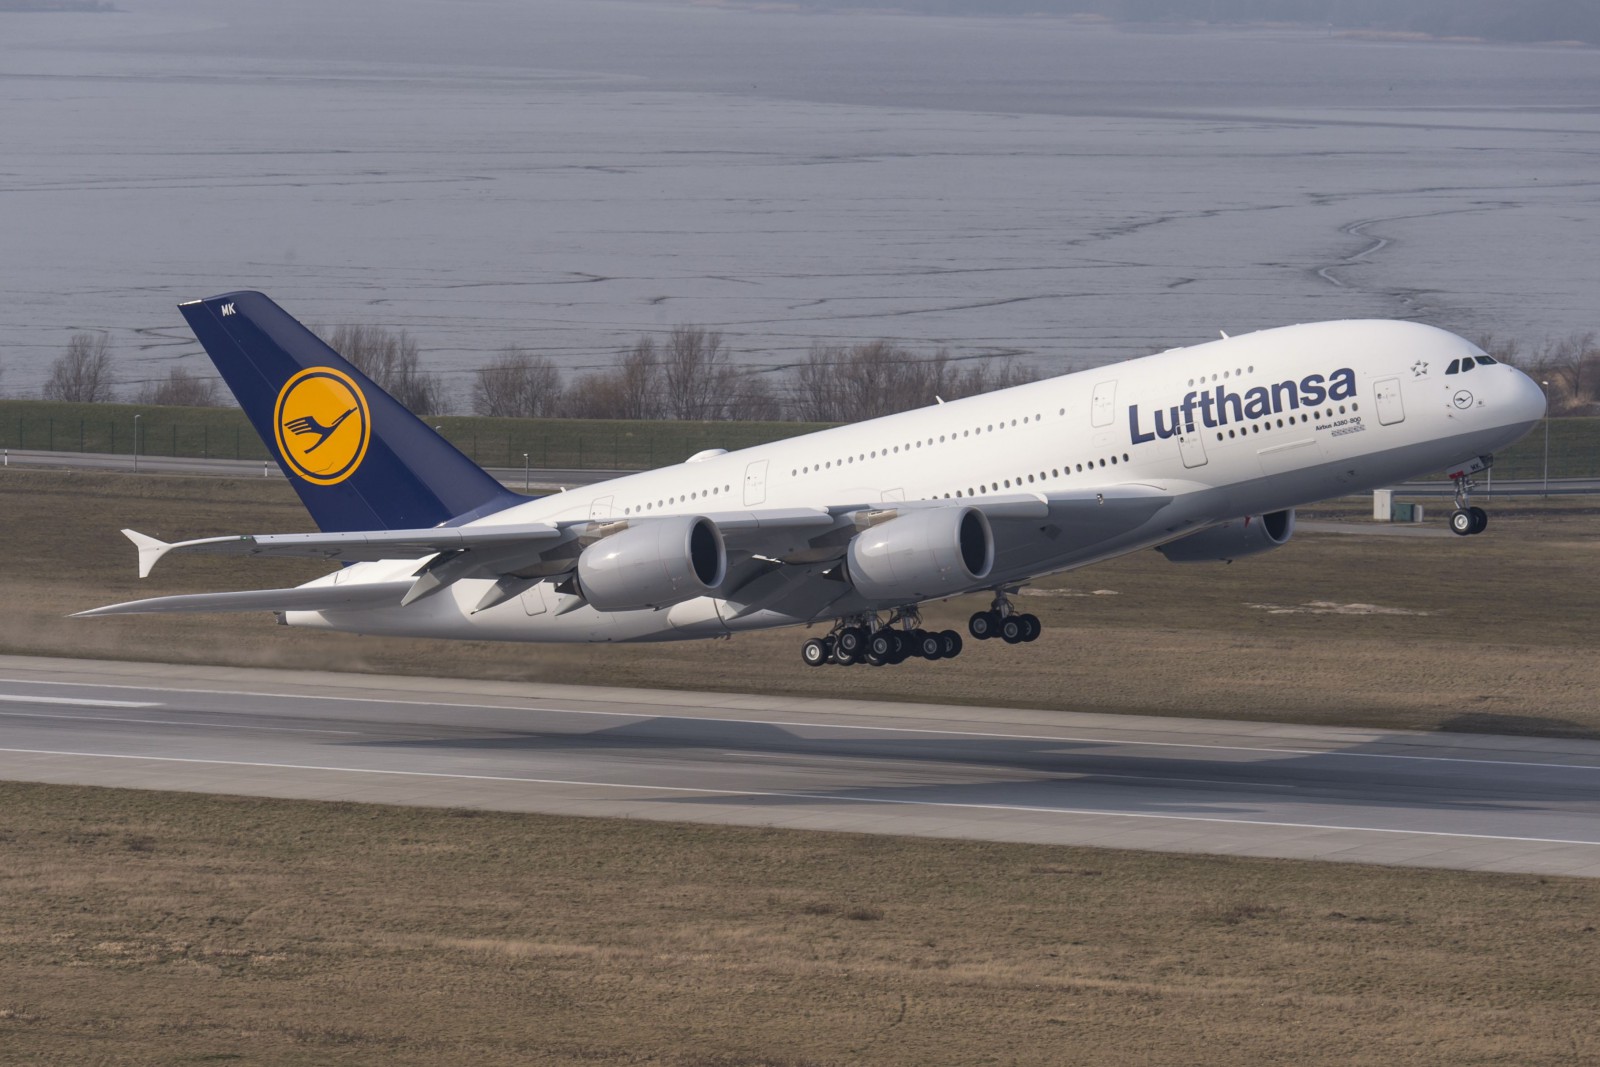 Lufthansa slashes flights as coronavirus outbreak hits bookings